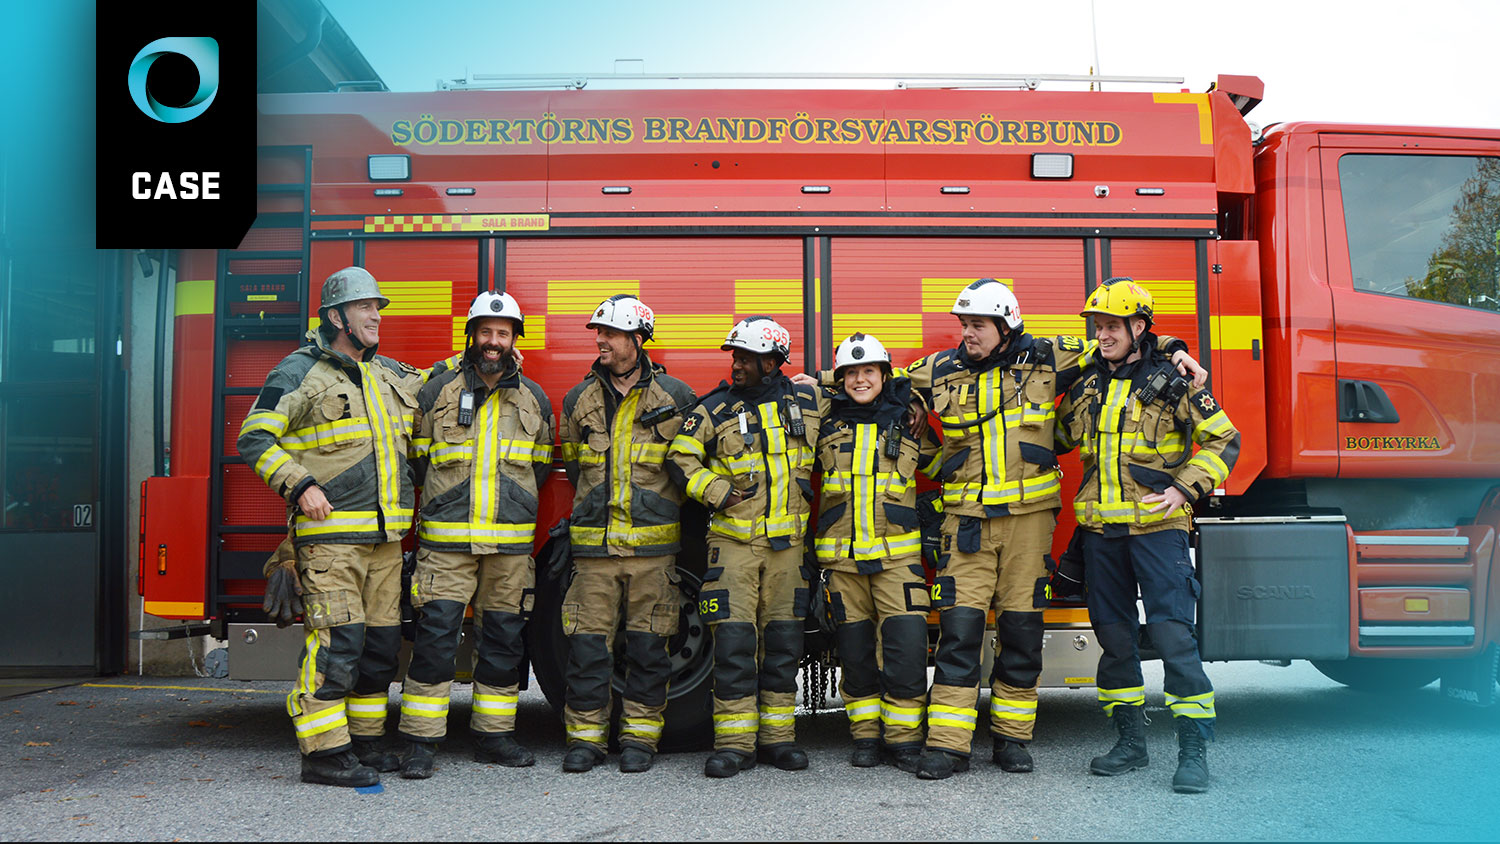 Södertörn Rescue Service has used Sepura since 2017